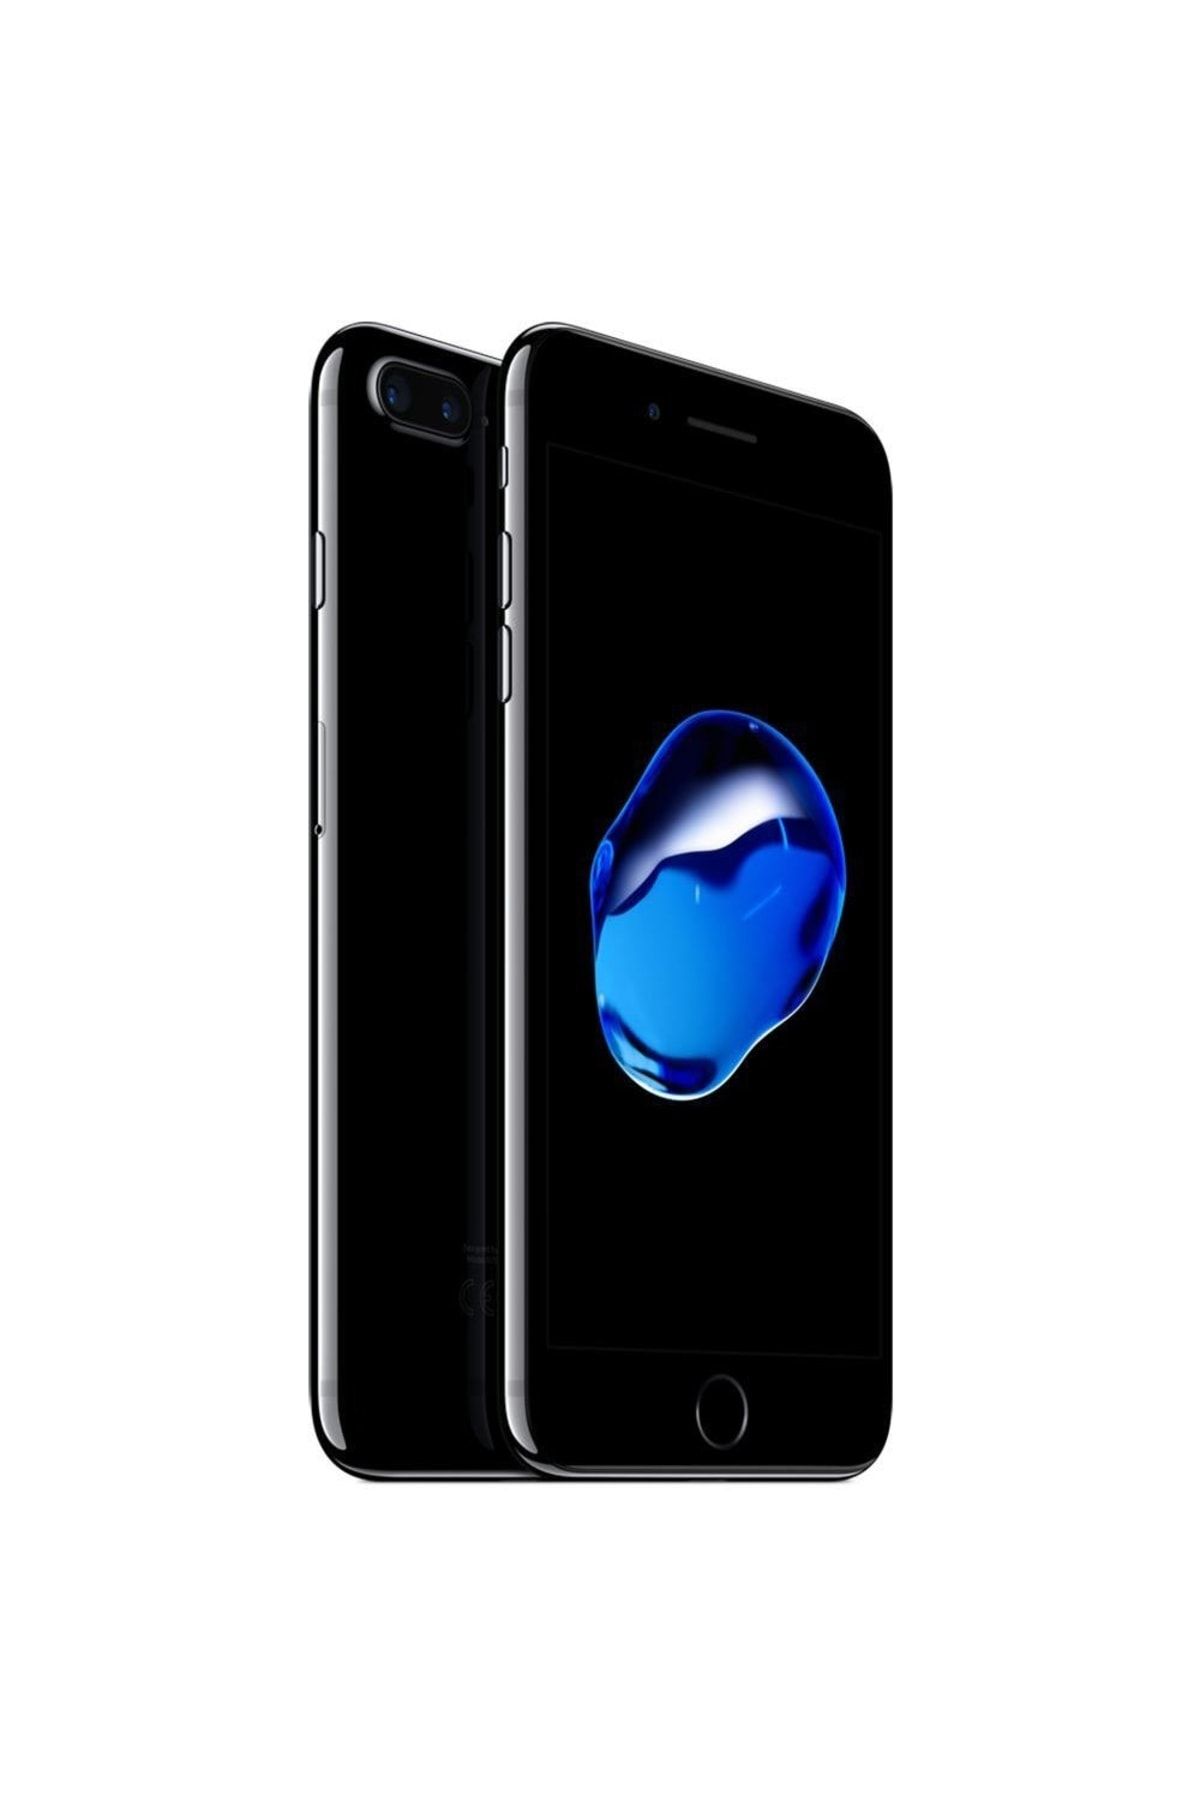 Apple Yenilenmiş iPhone 7 Plus Jet Black 128 GB B Kalite (12 Ay Garantili)